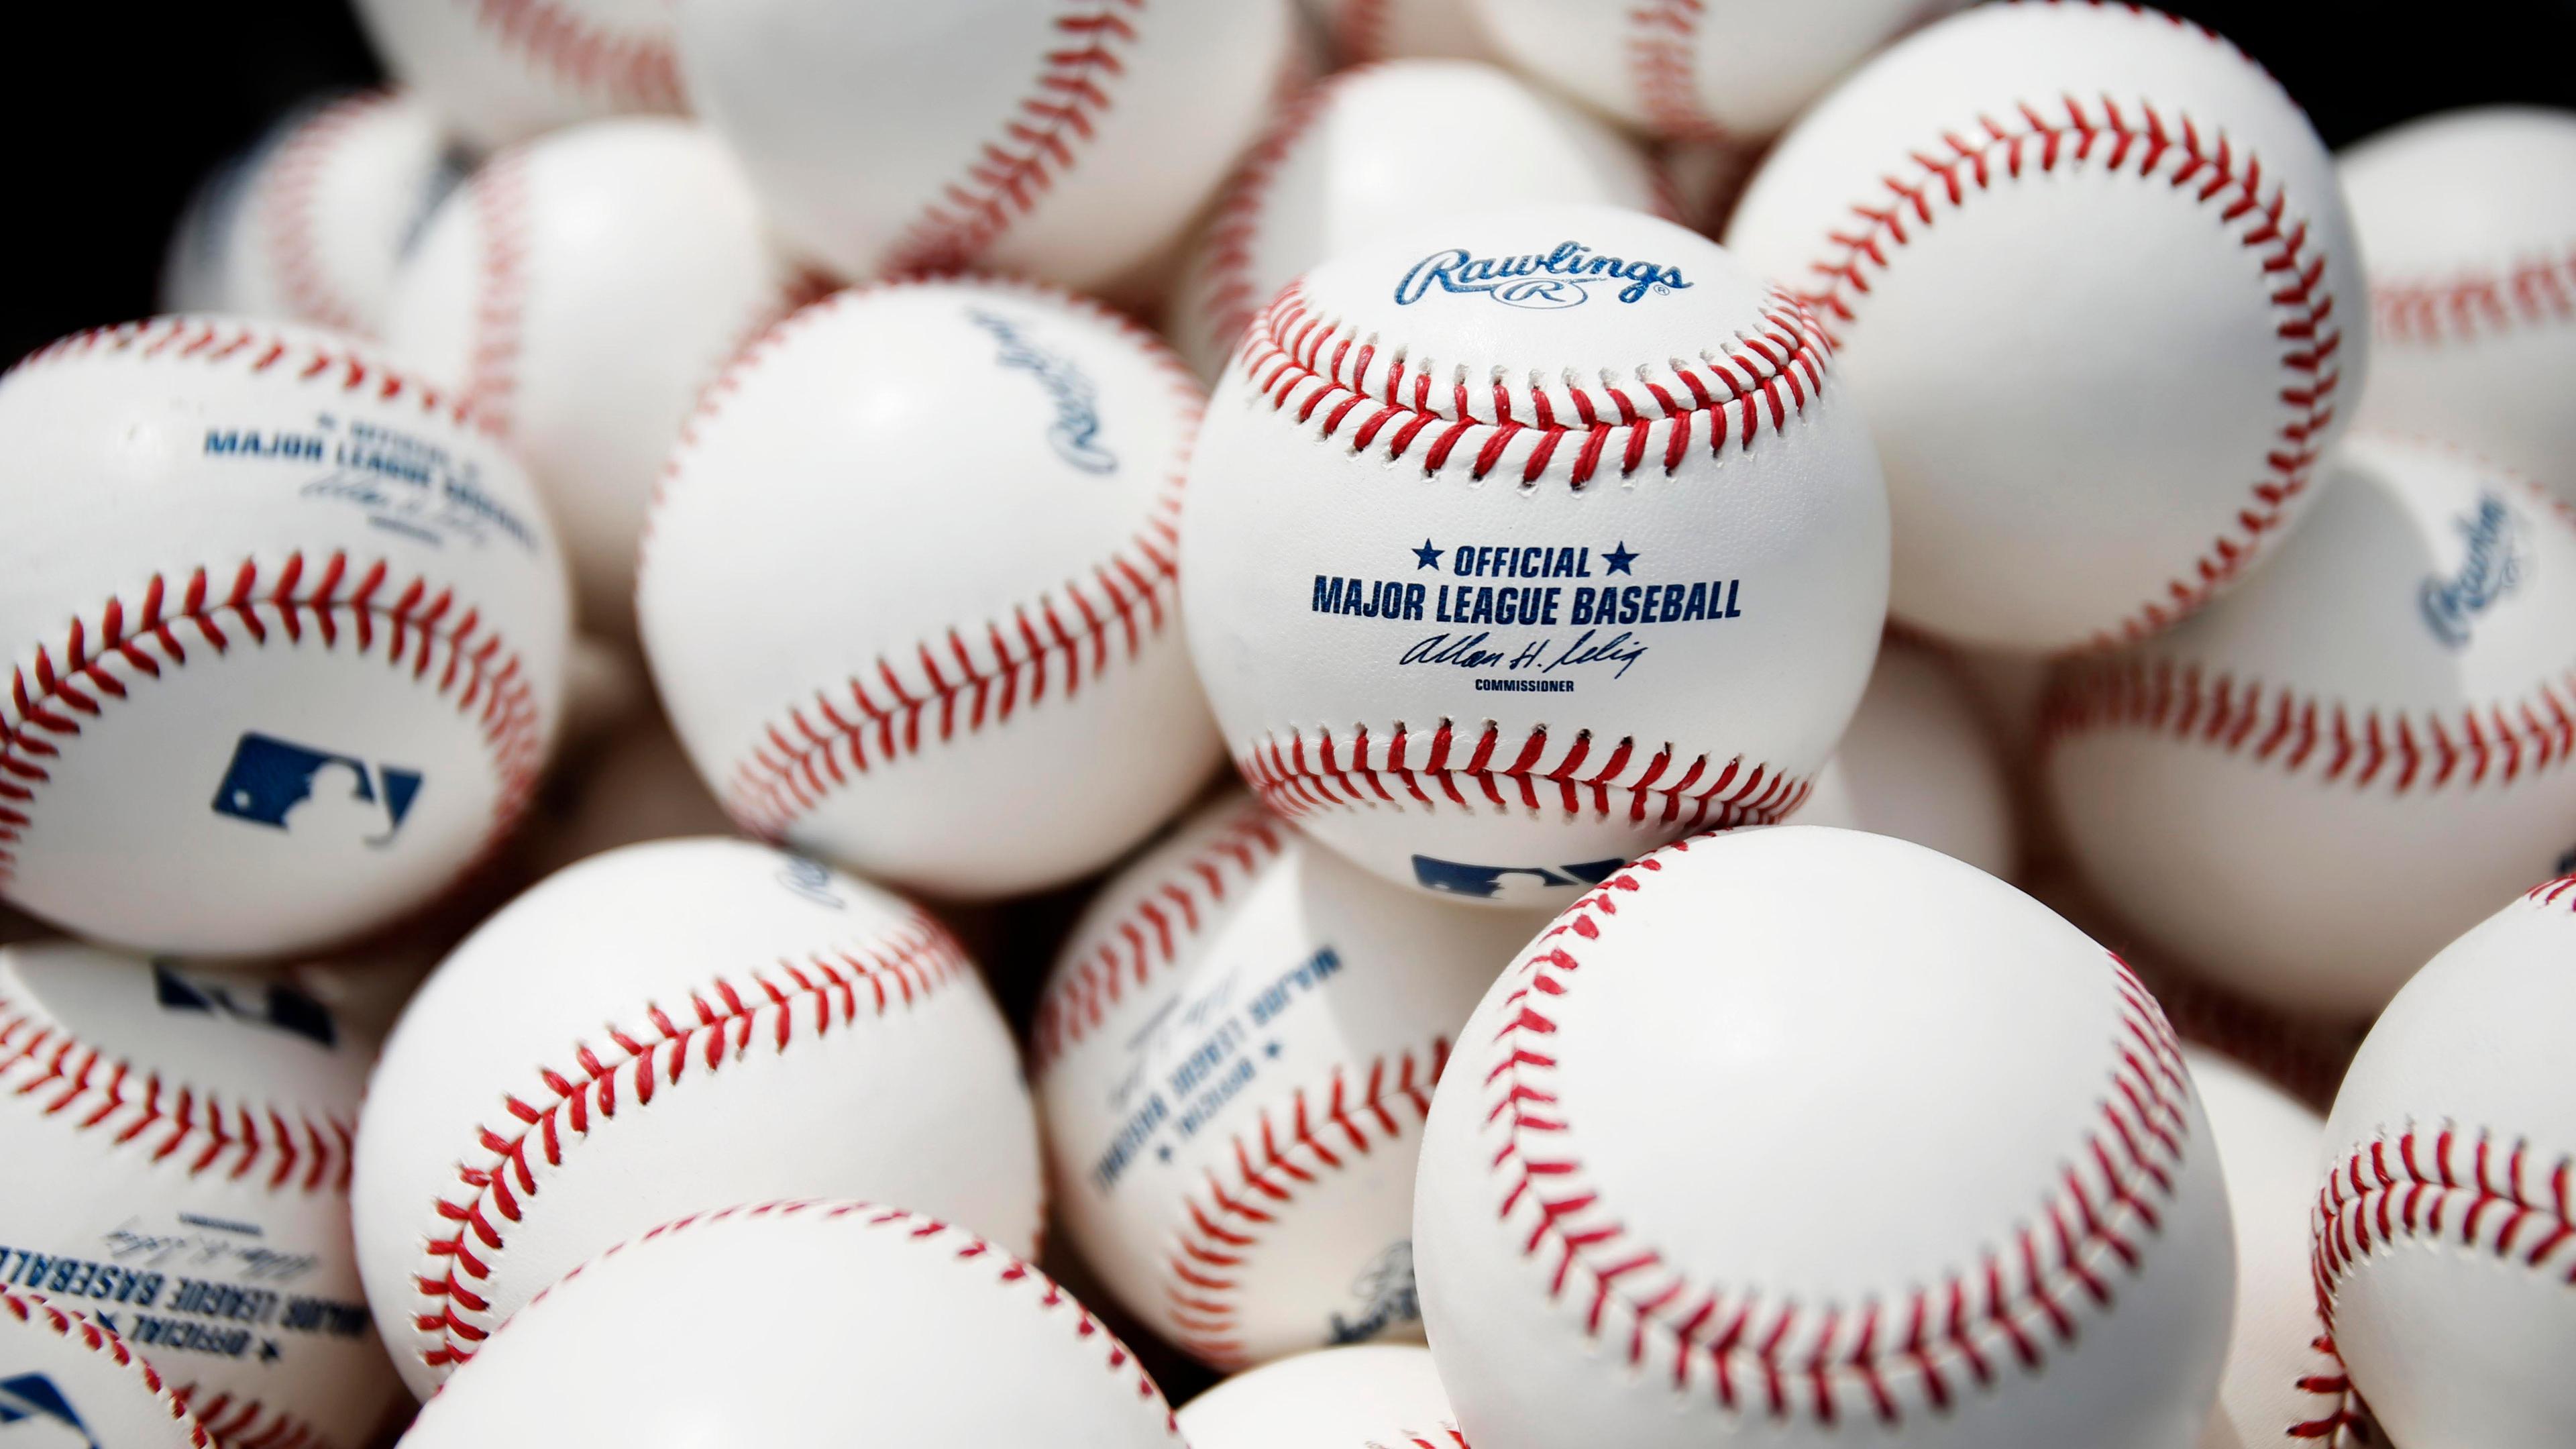 Baseball glove, bat and ball / Chris Humphreys-USA TODAY Sports